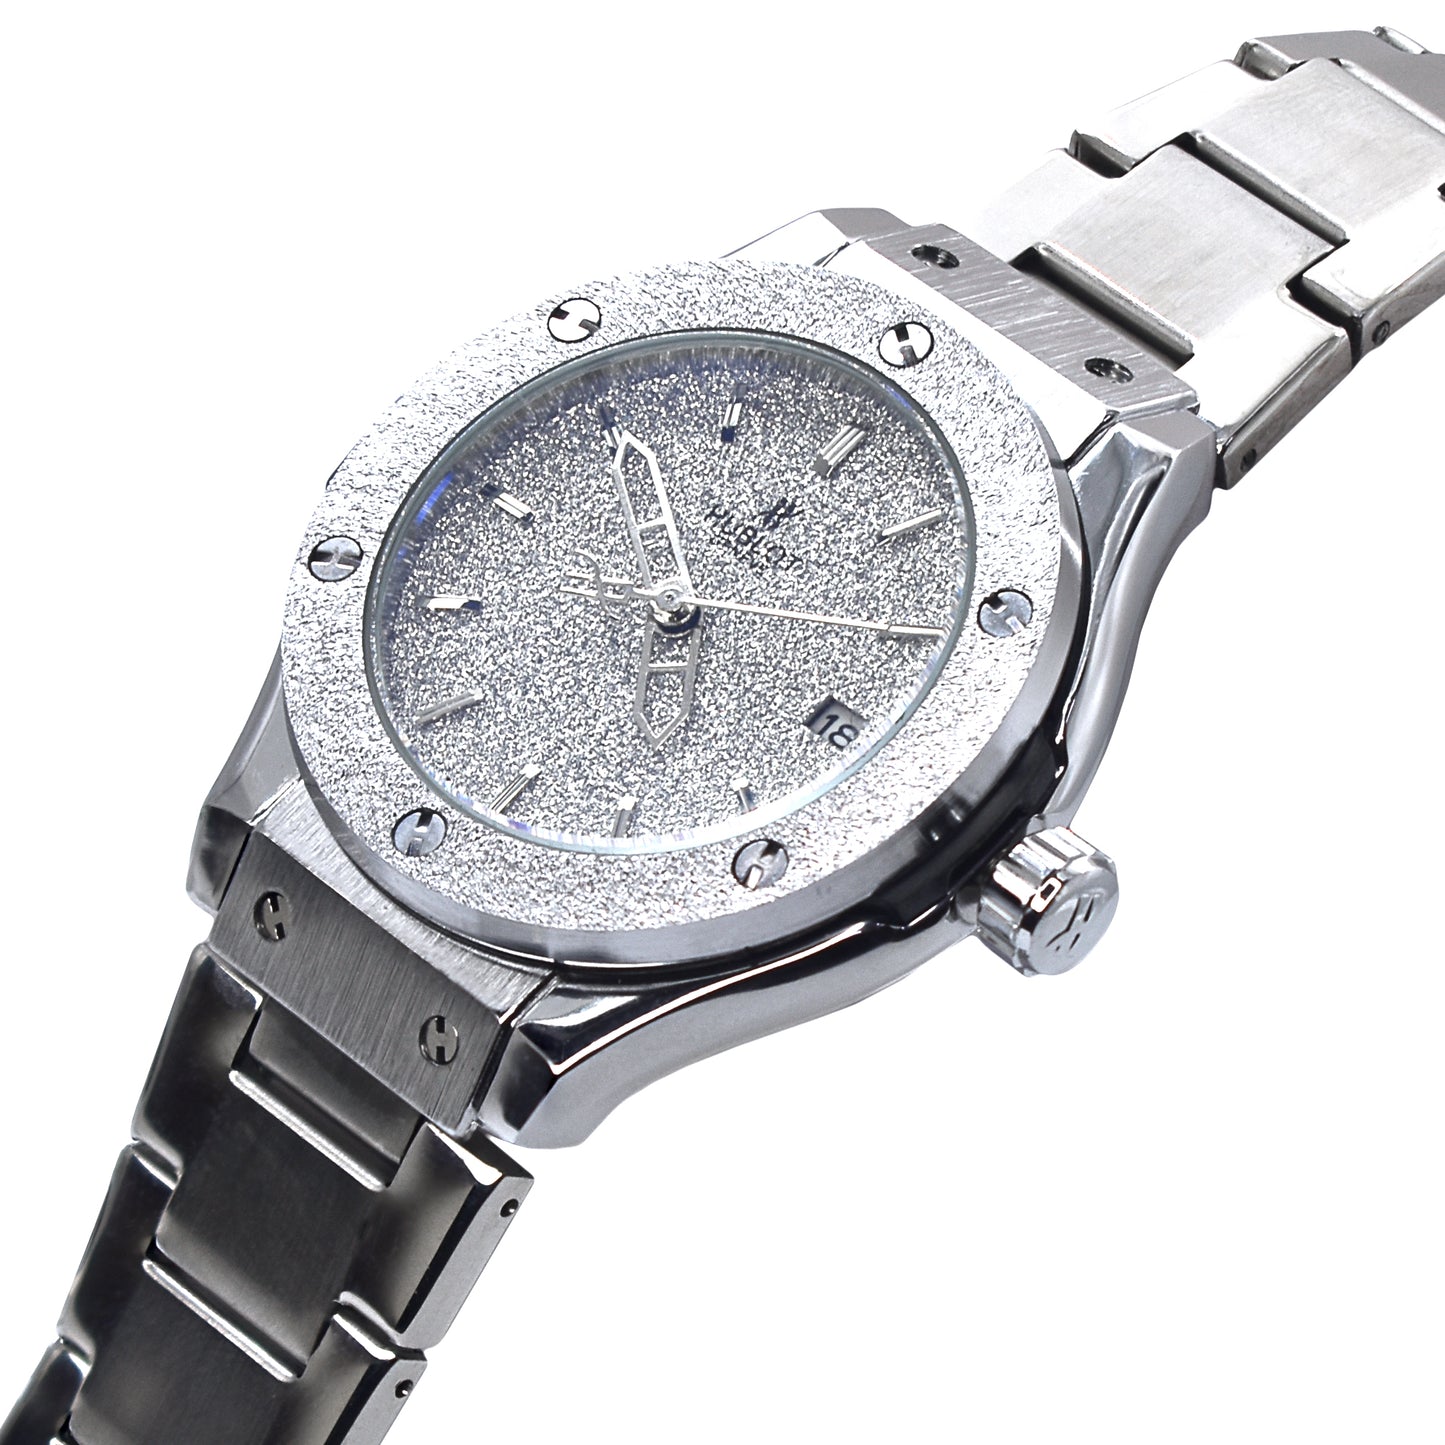 Premium Quality Watch For Women | HBLT L Watch 1001